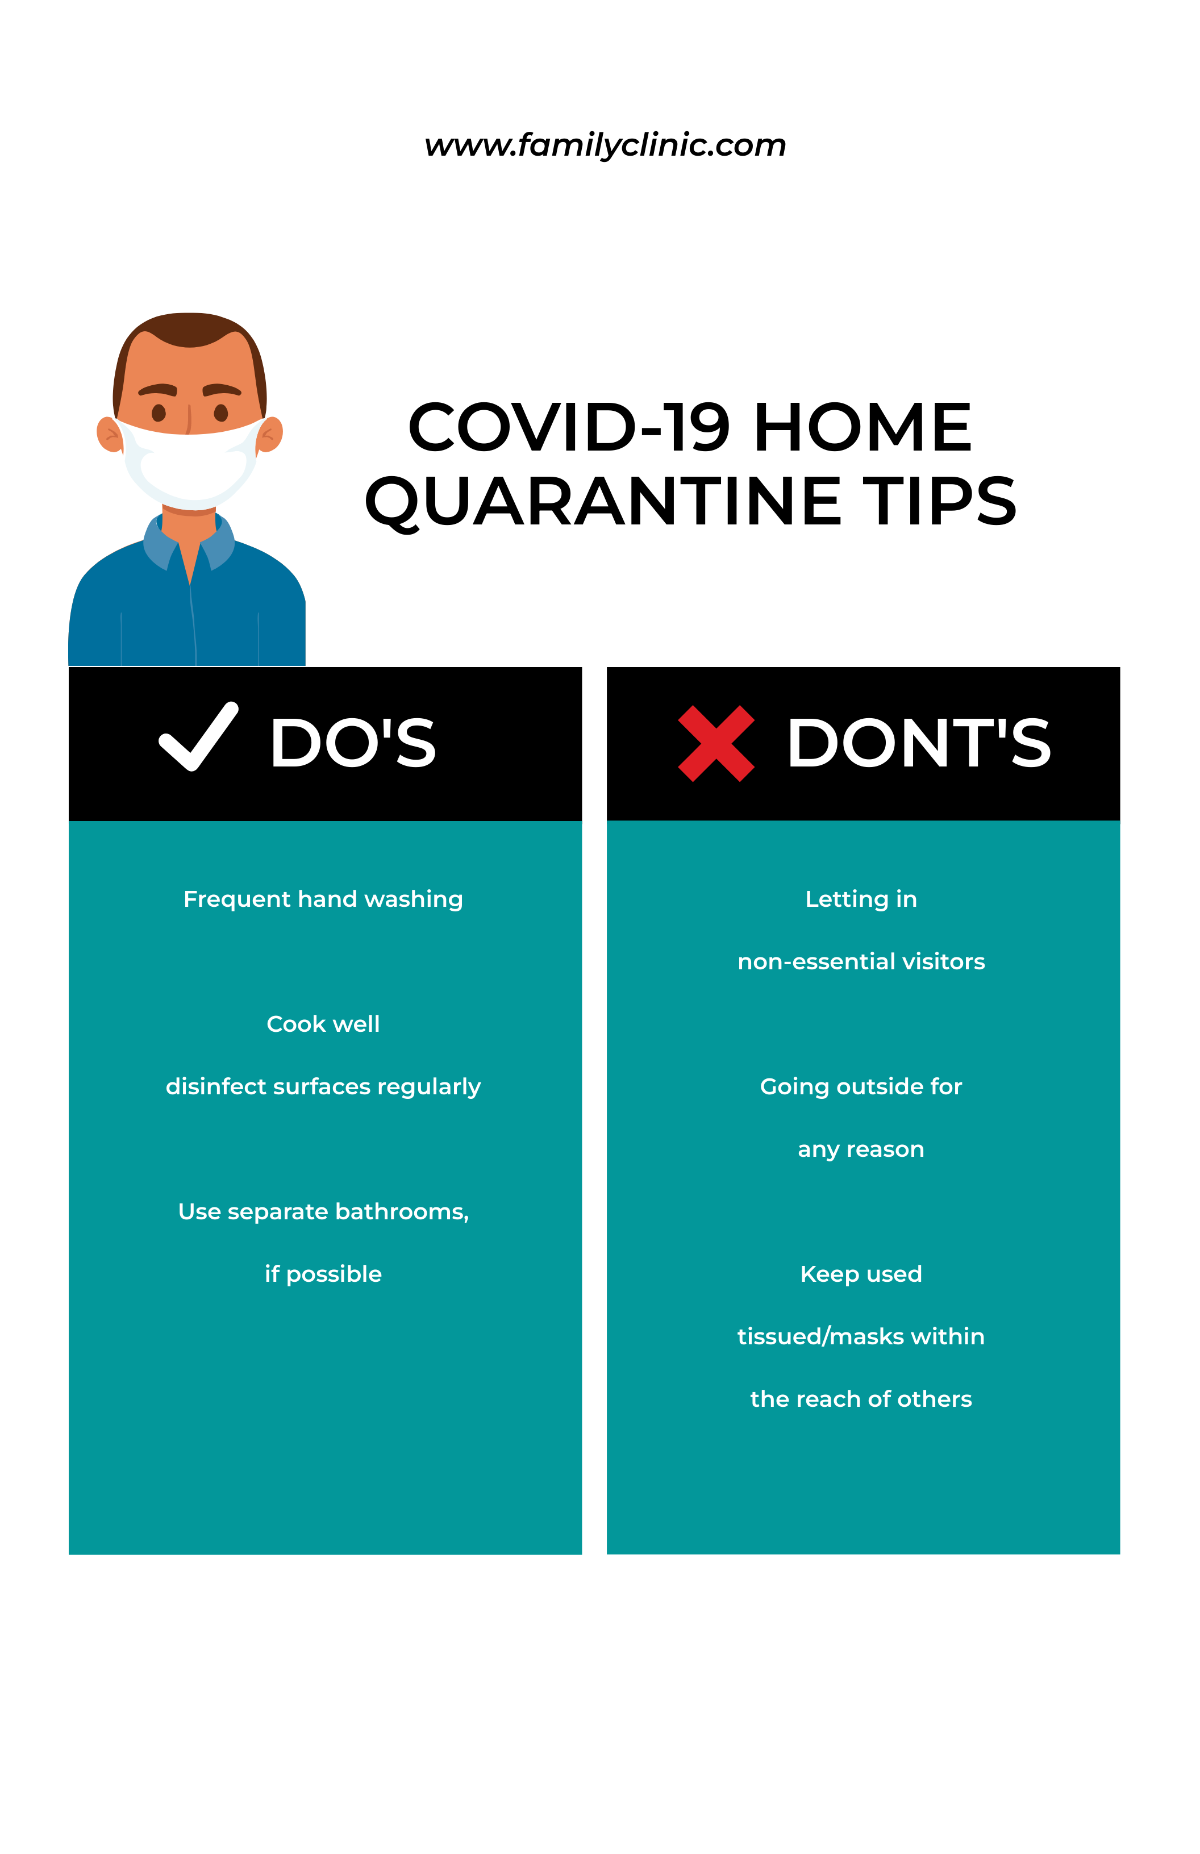 Corona COVID-19 Home Quarantine Poster Template